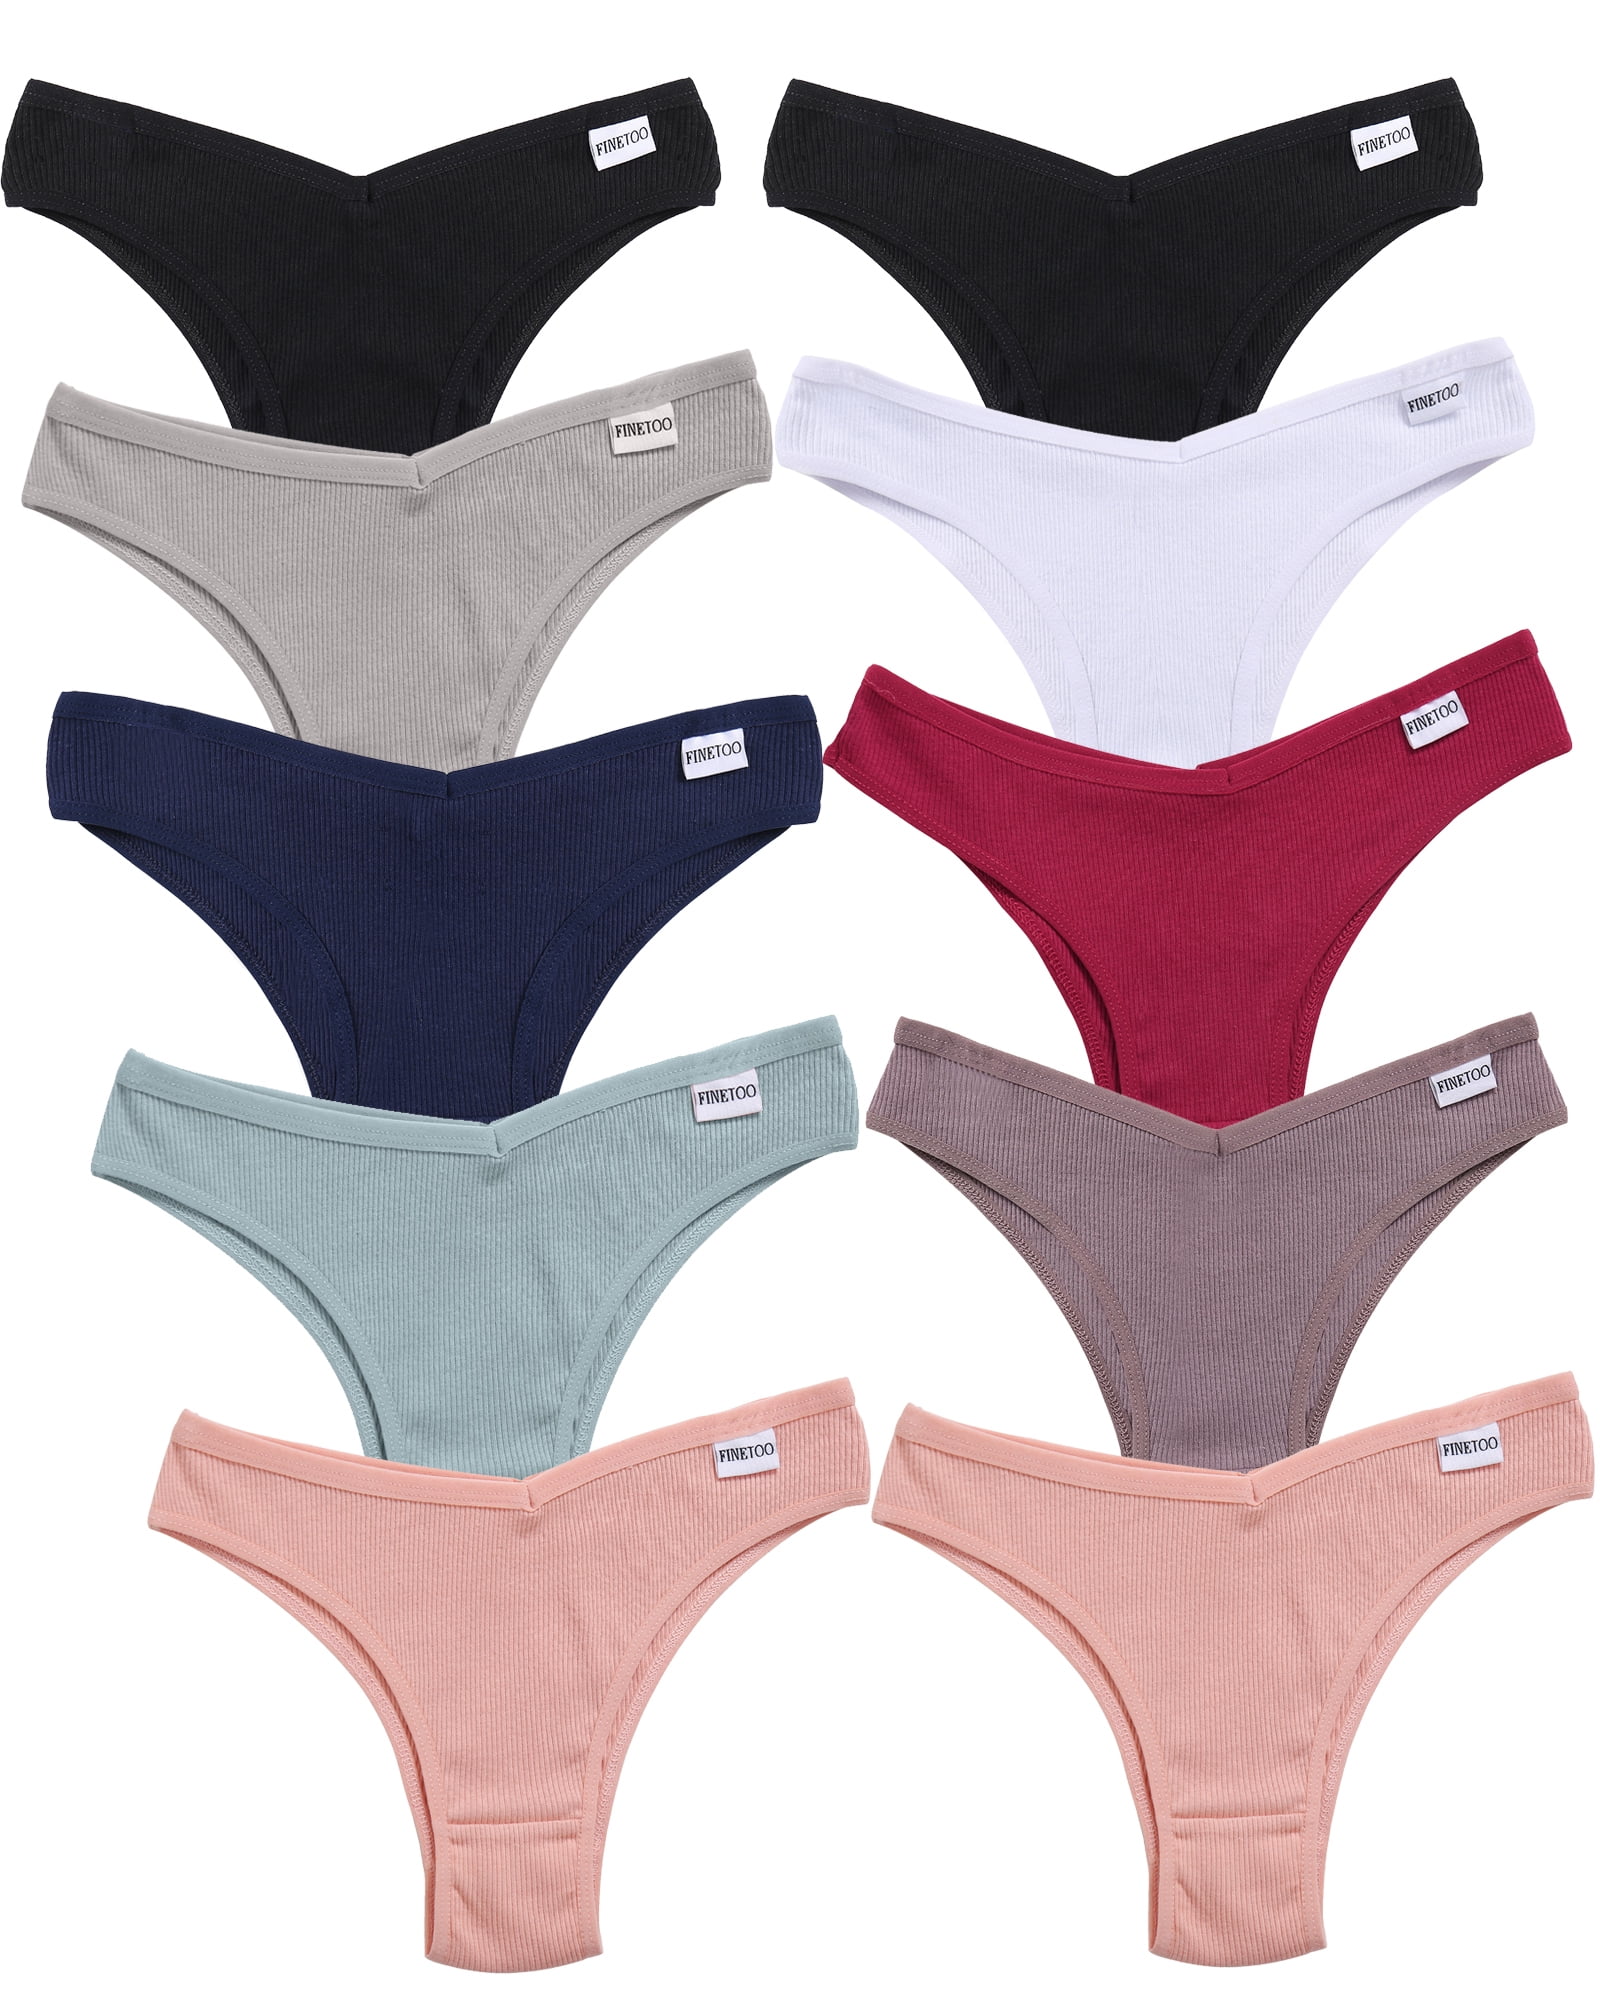 FINETOO Pack of 6 Hipster Women's Cotton Underwear Women Set Cotton Briefs  Sports Briefs Sexy Panties Underpants Multipack S-XL